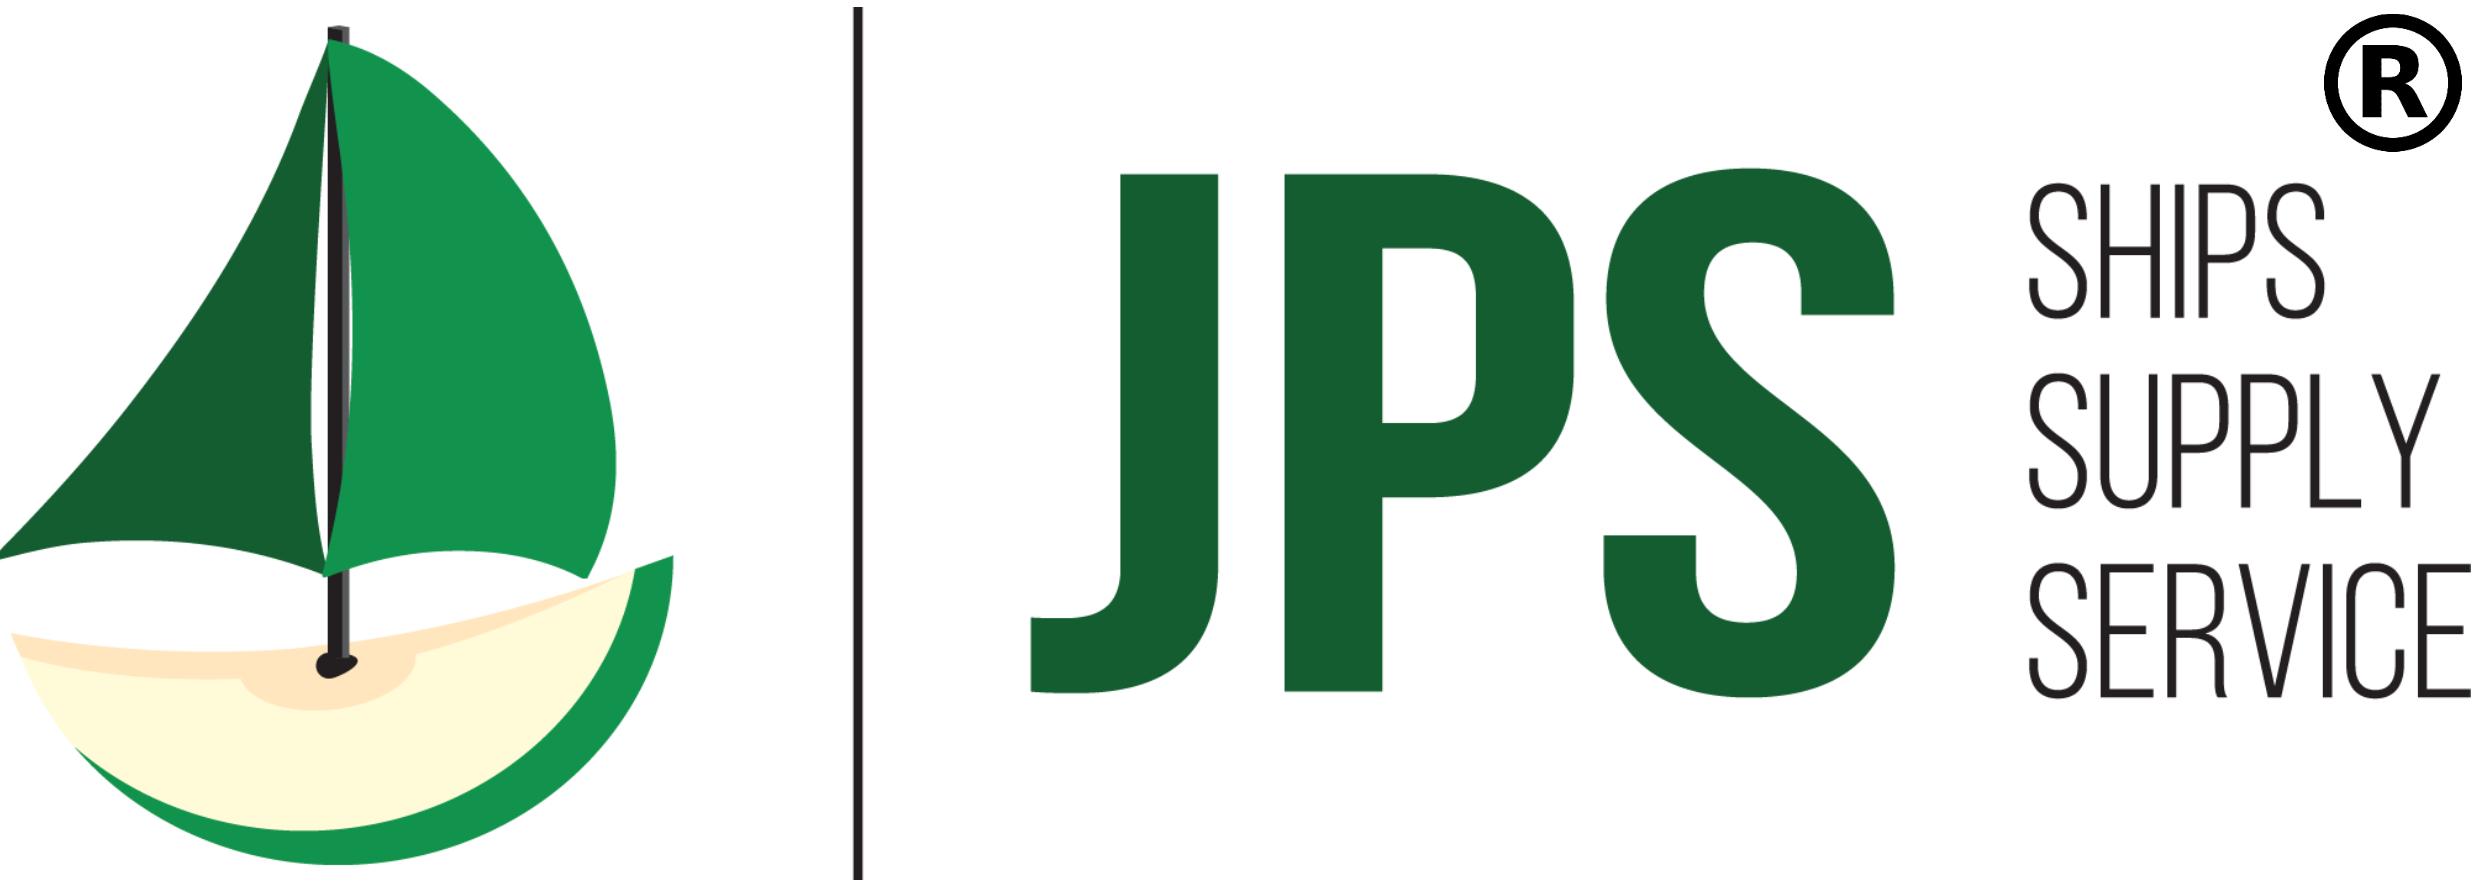 JPS Ships Supply Service